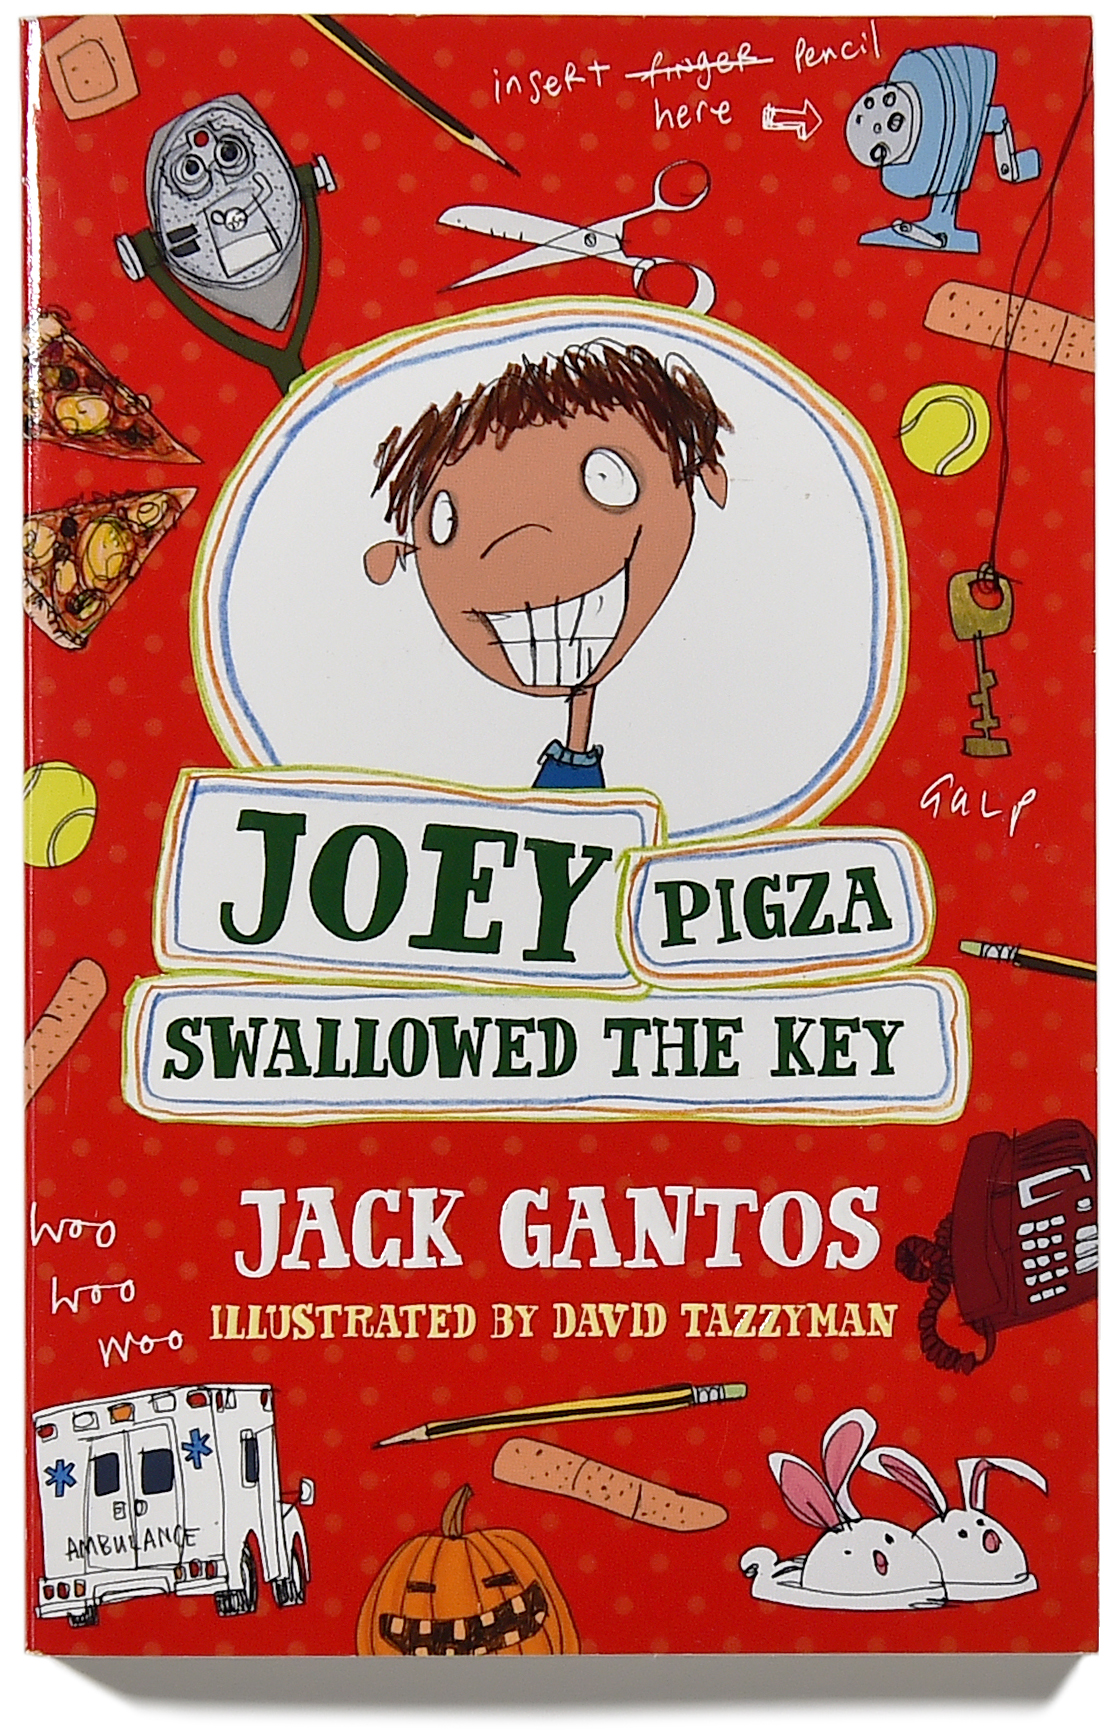 Joey Pigza series